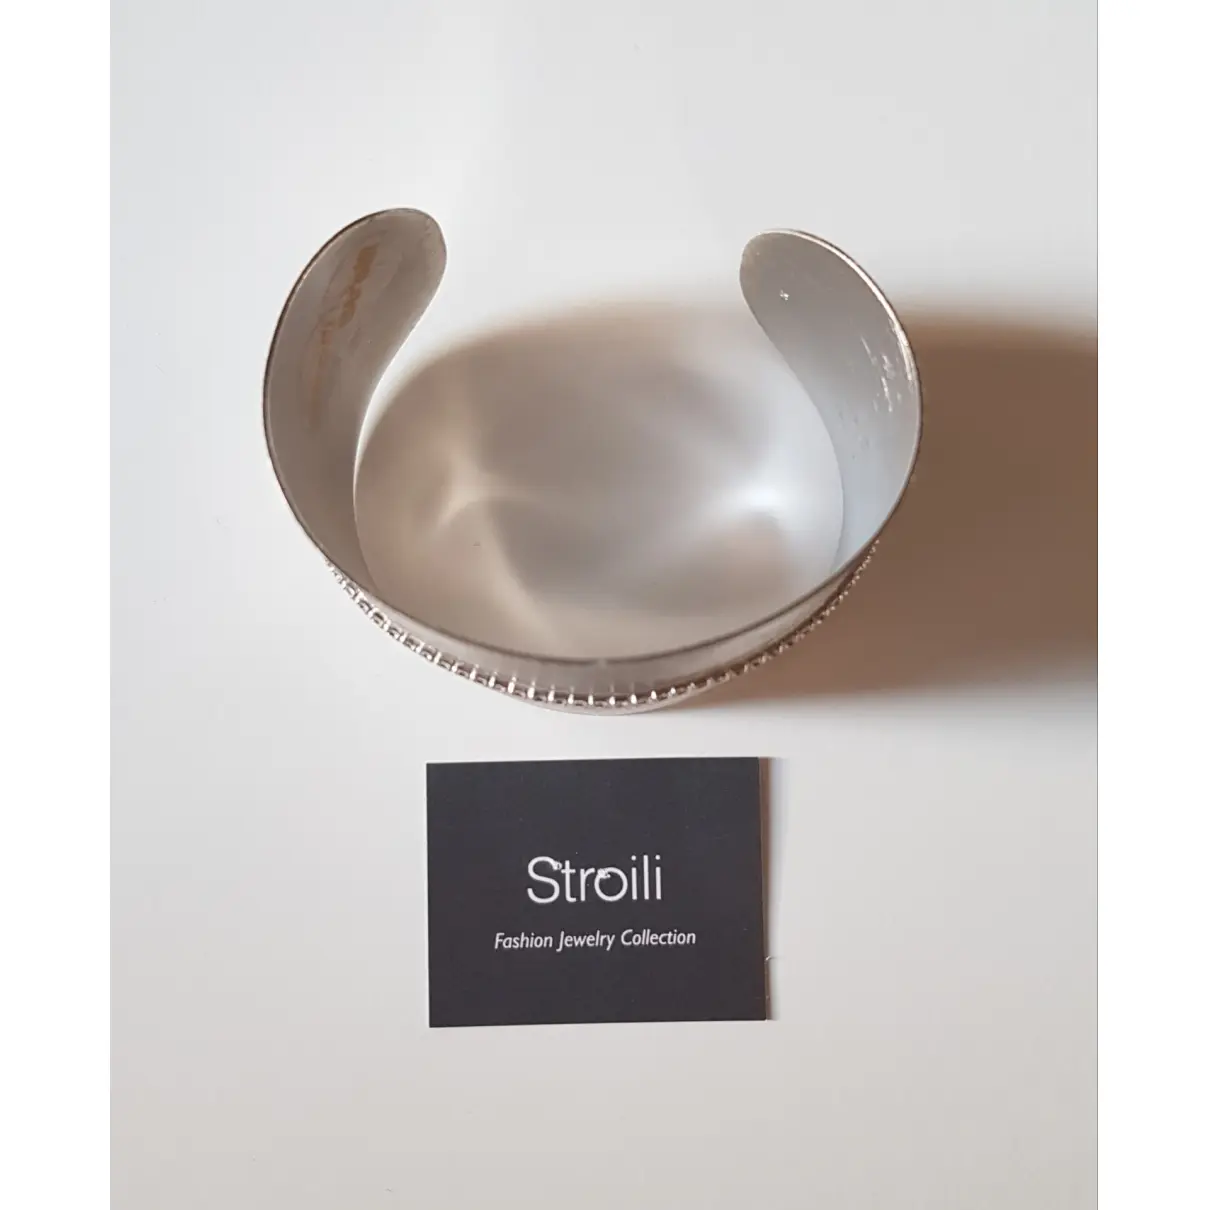 Buy Stroili Bracelet online